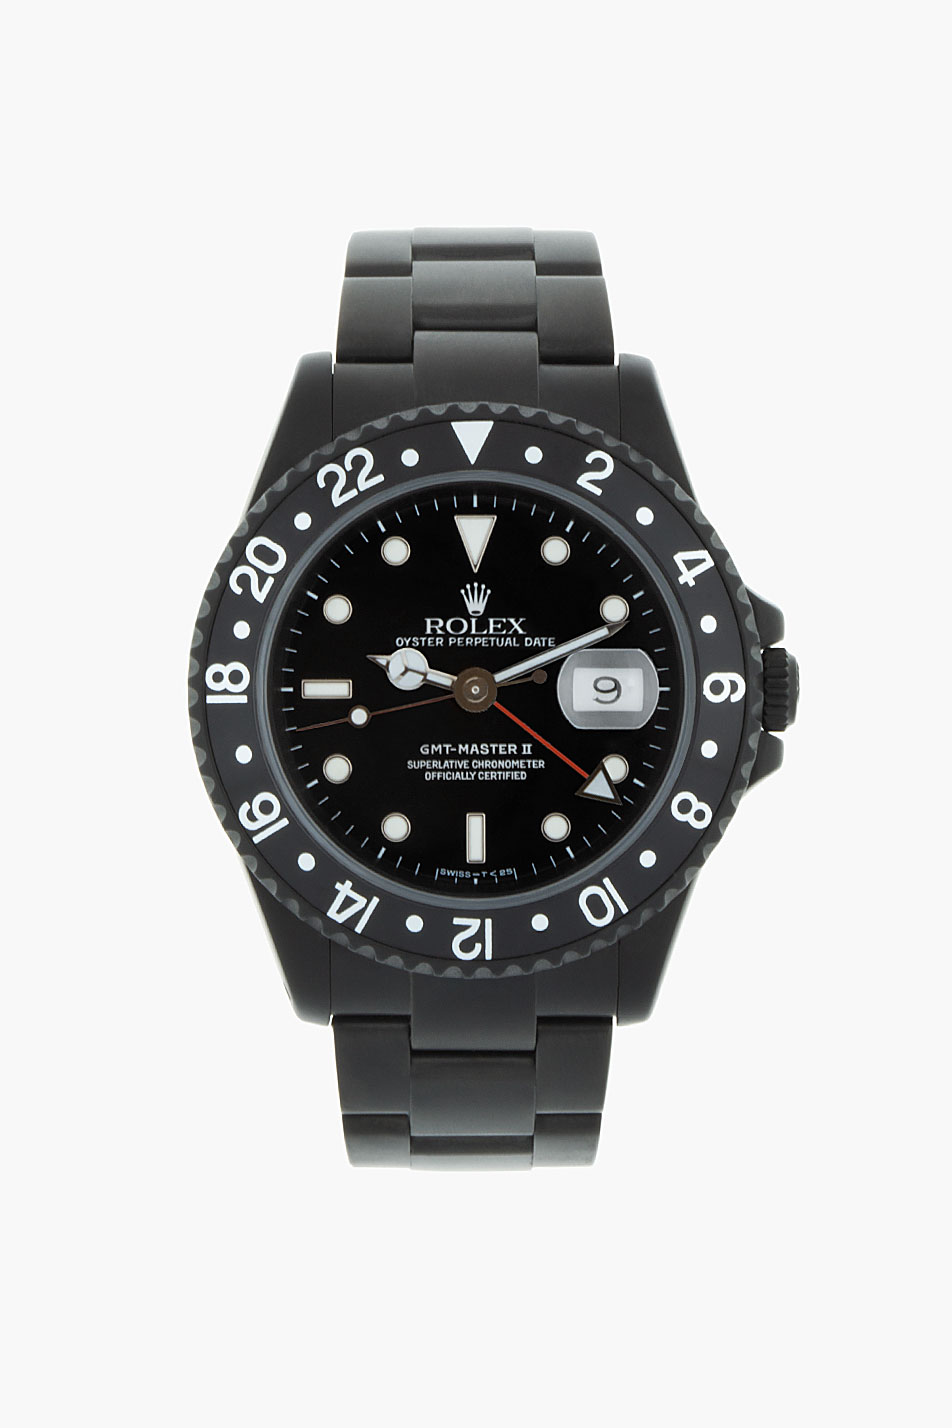 Refurbished Black Rolex Watch Limited Edition 5